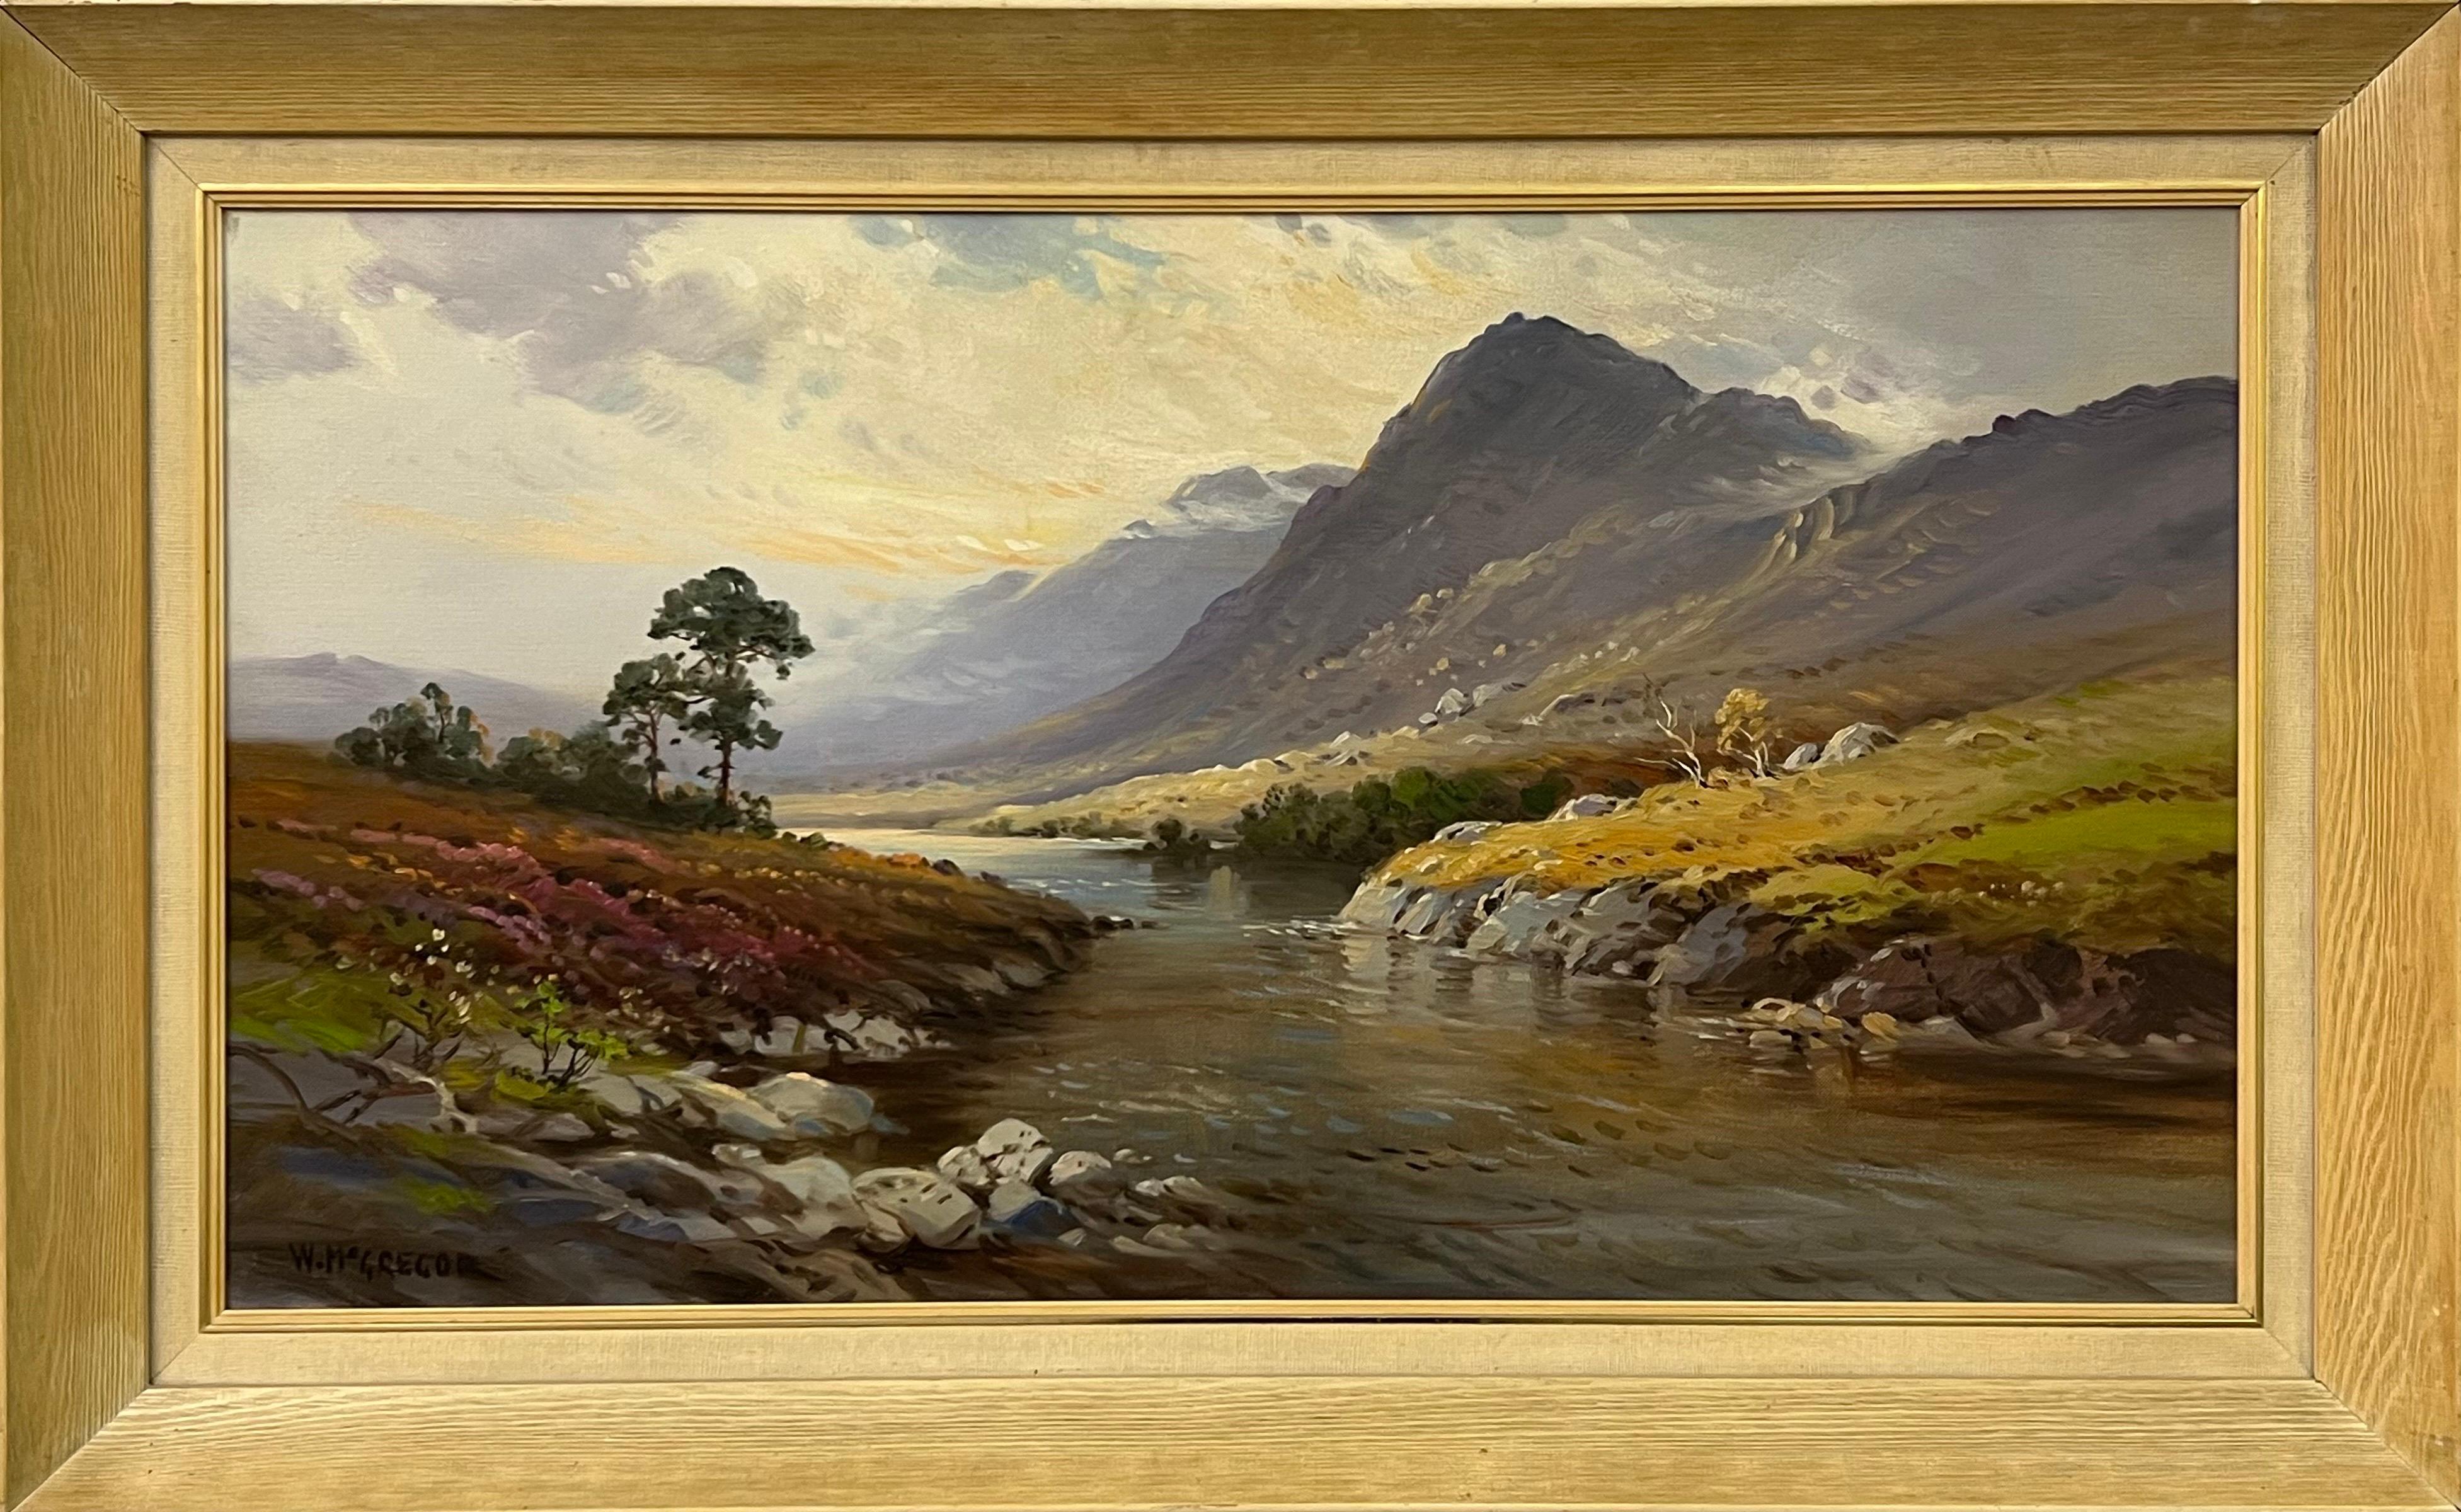 William McGregor Figurative Painting - Loch Eilt in the Scottish Highlands Realist Landscape Oil Painting